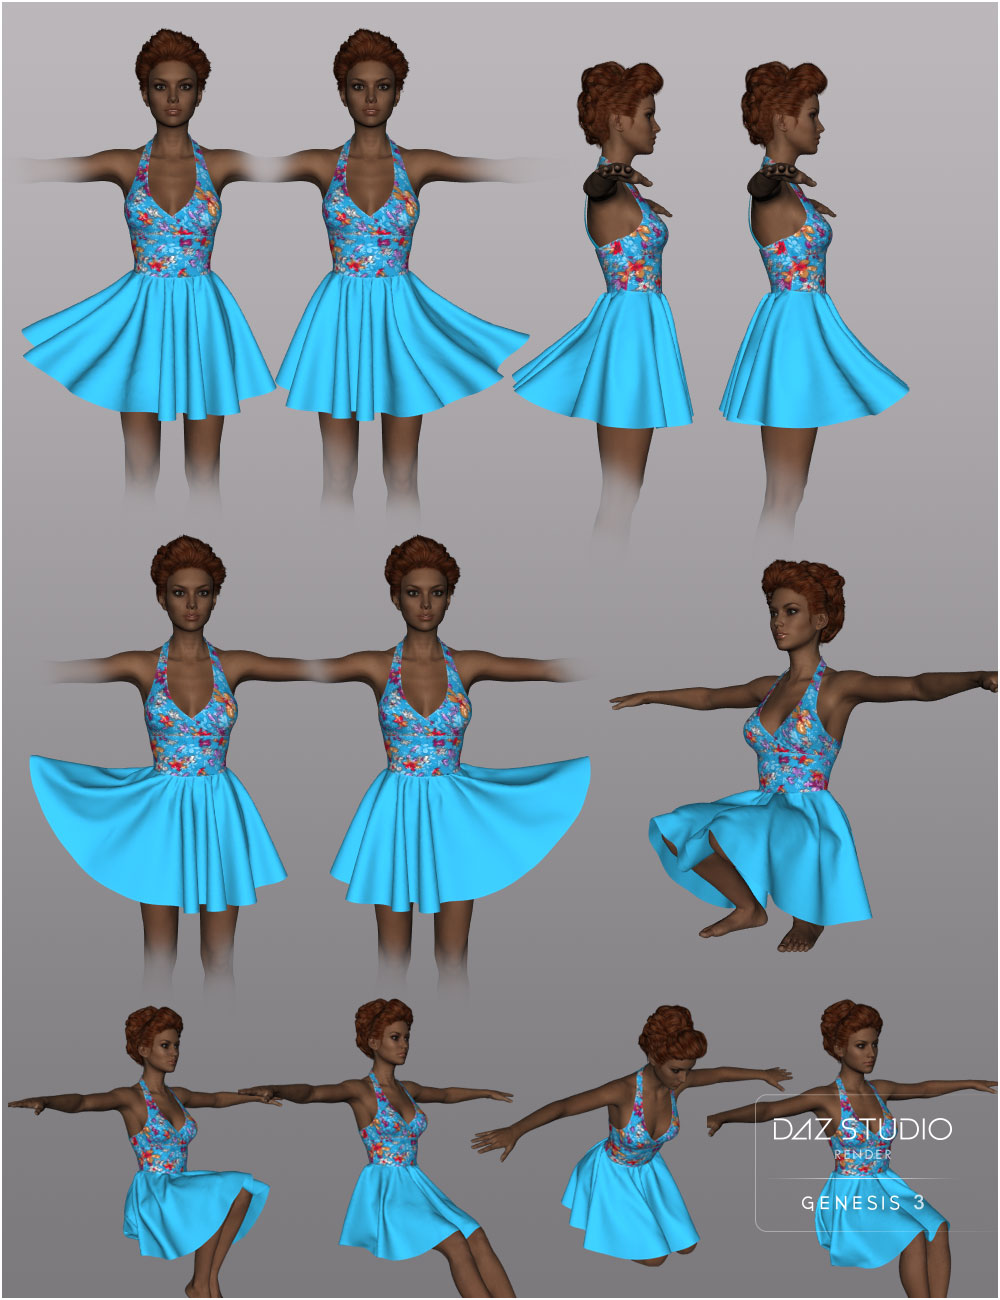 W Skirt for Genesis 3 Female(s) by: Cute3D, 3D Models by Daz 3D